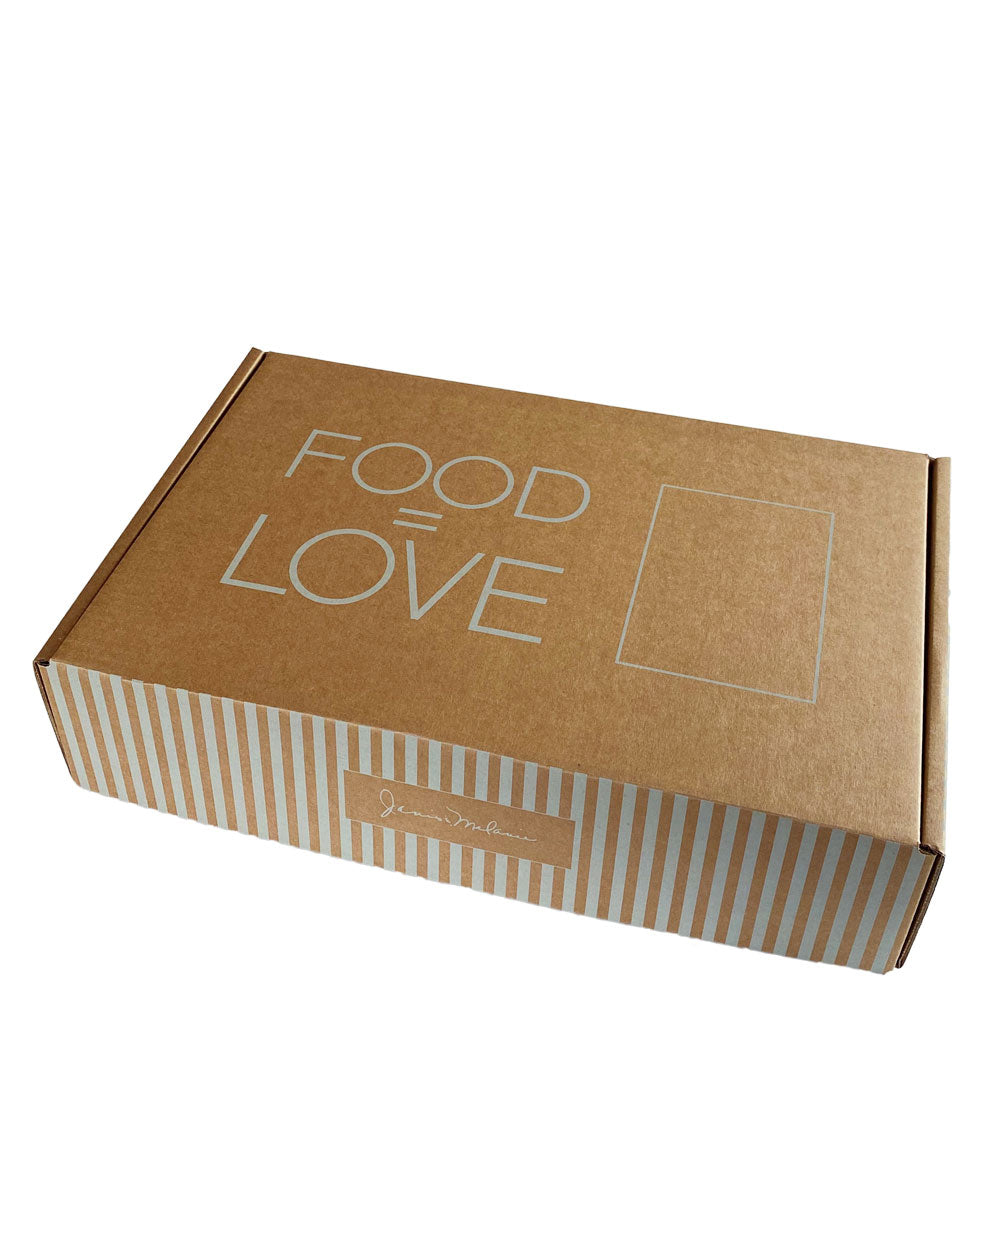 Food=Love large gift box